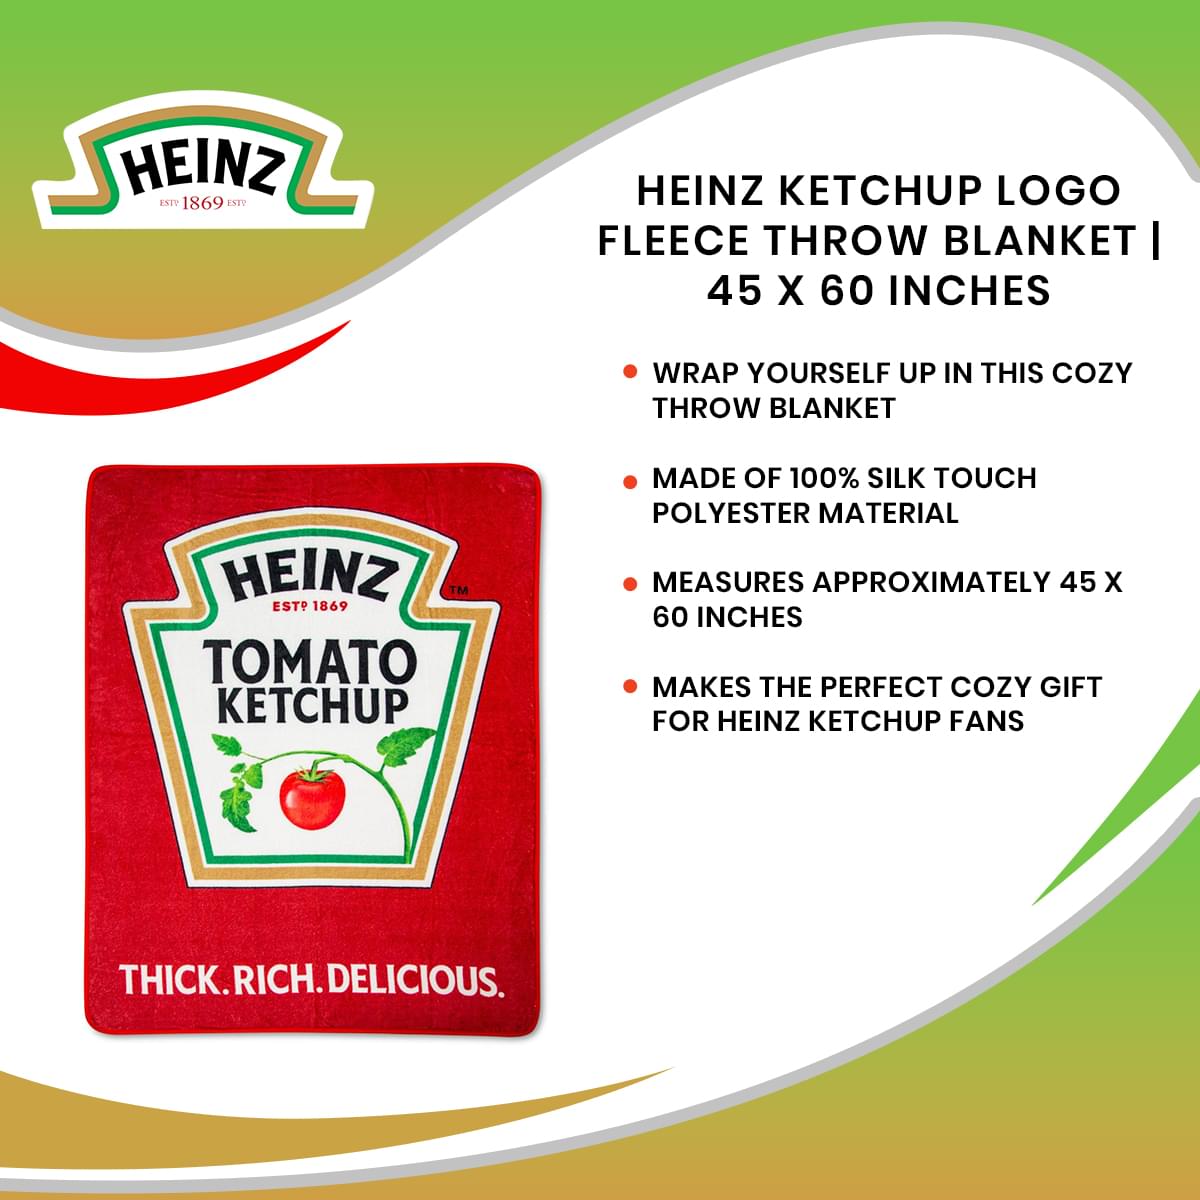 Heinz Ketchup Logo Fleece Throw Blanket | 45 x 60 Inches